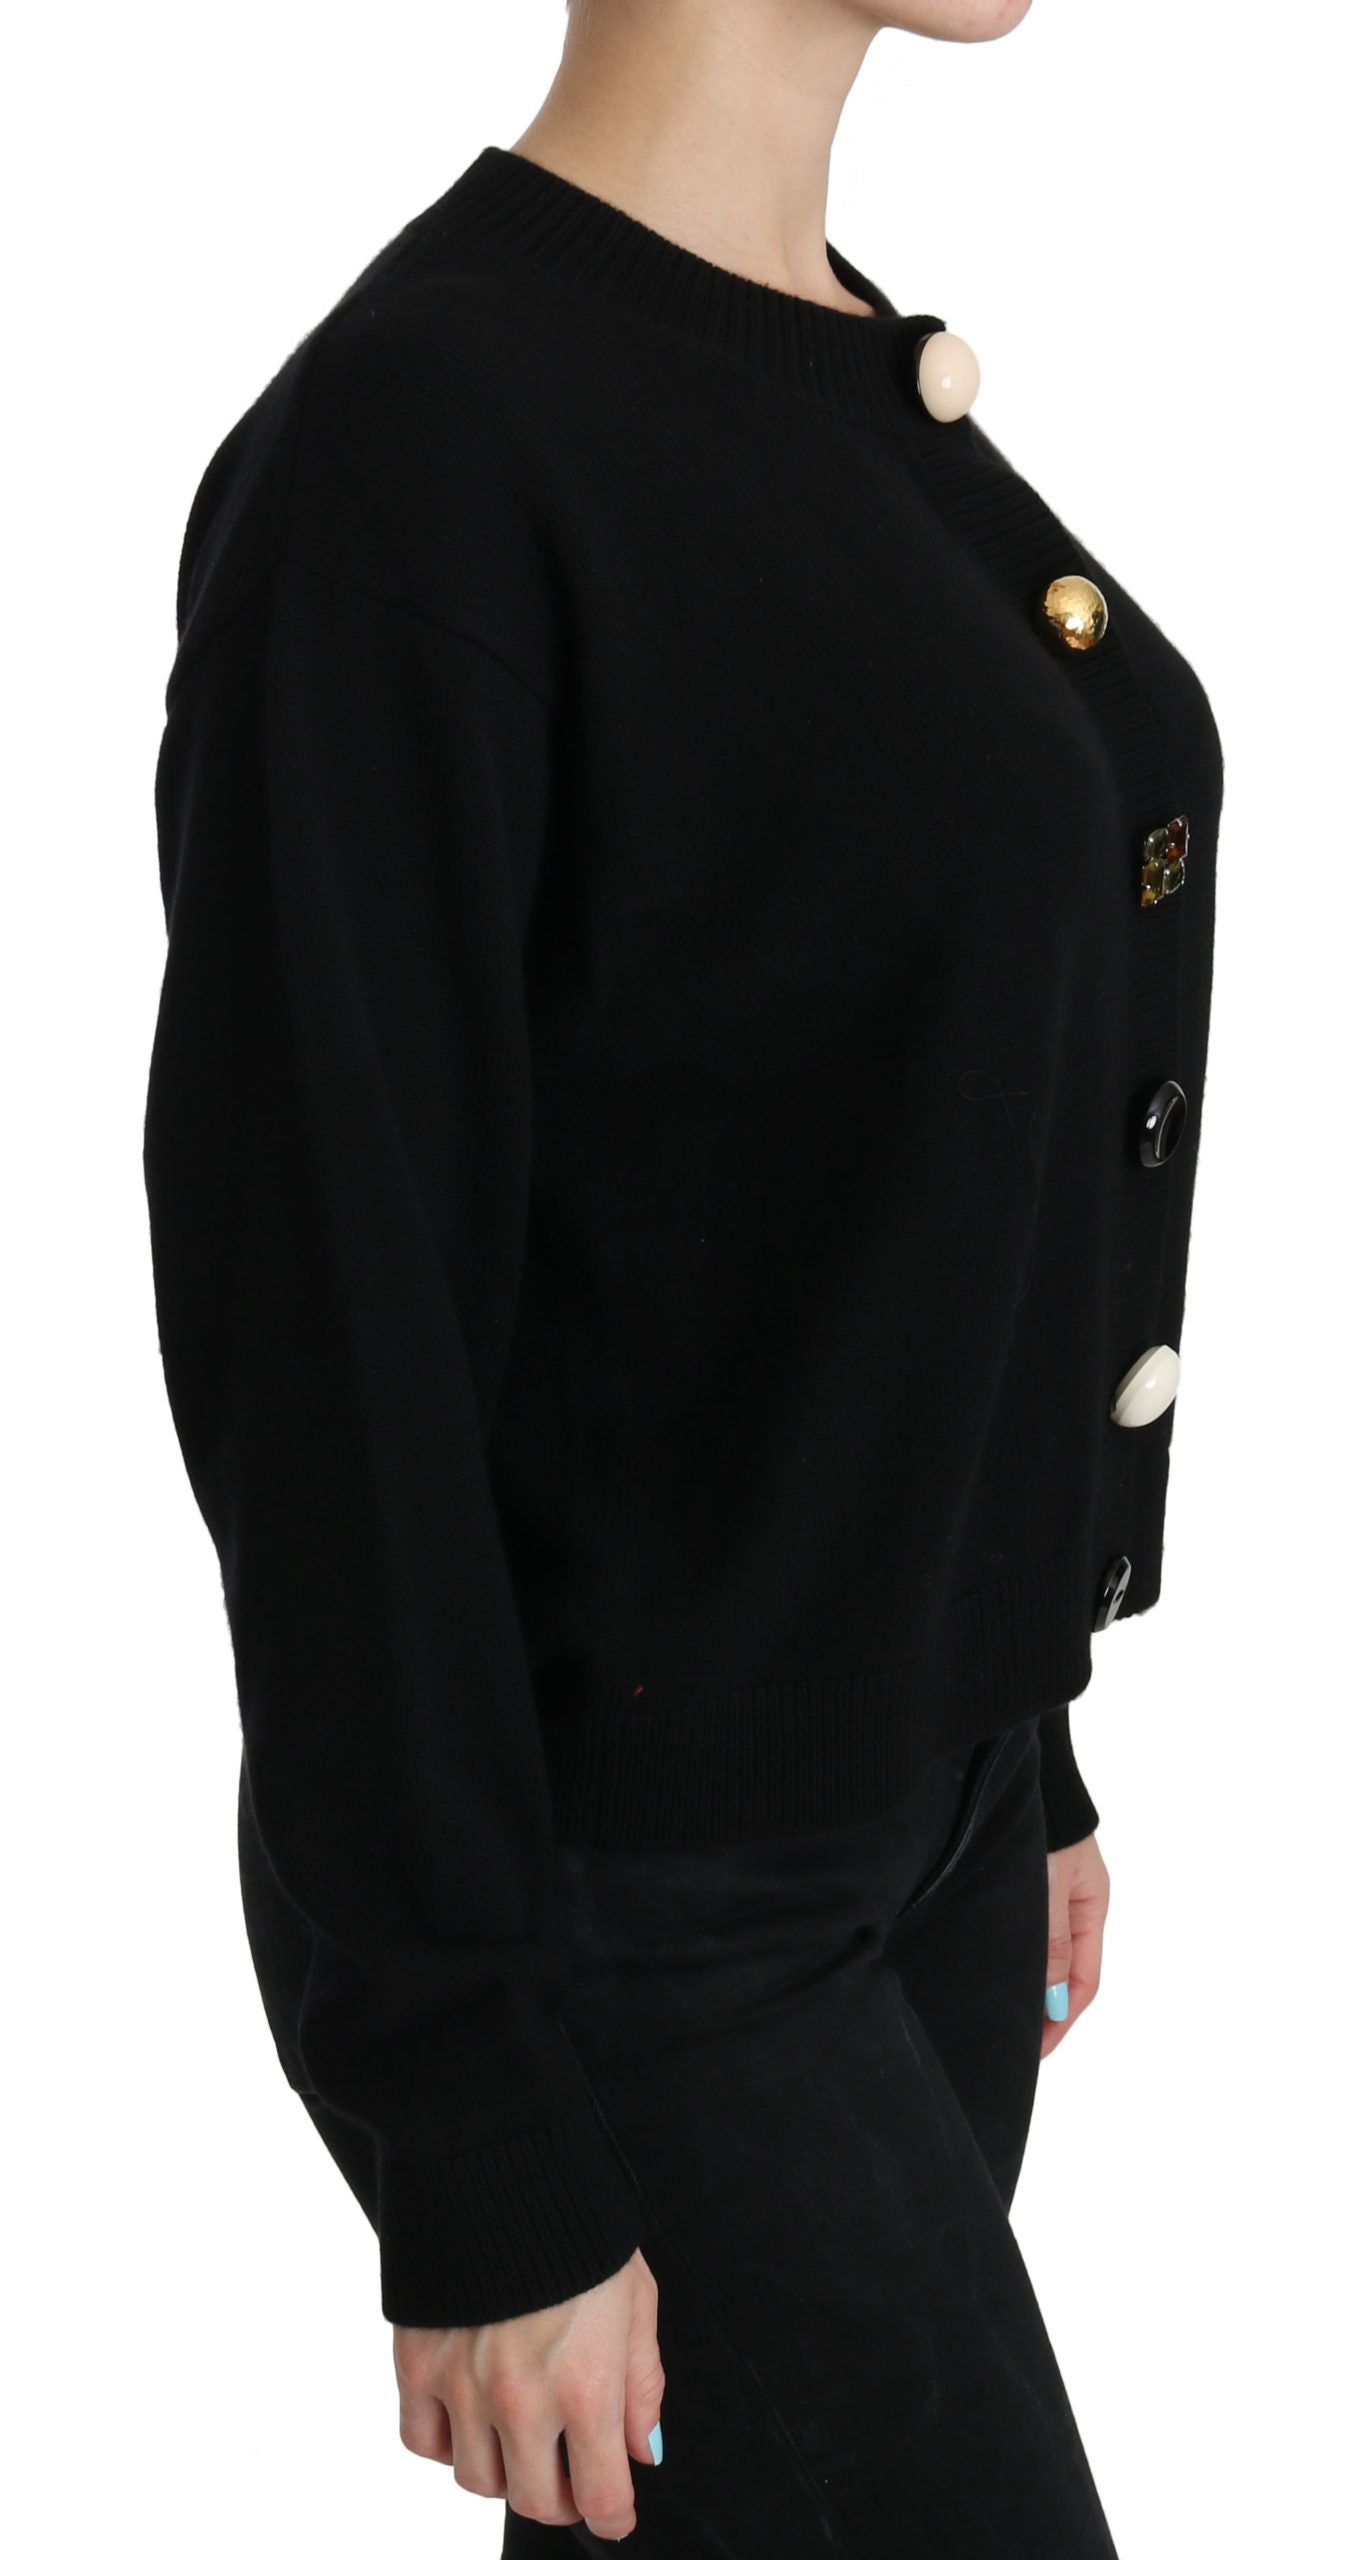 Dolce & Gabbana Black Button Embellished Cardigan Sweater